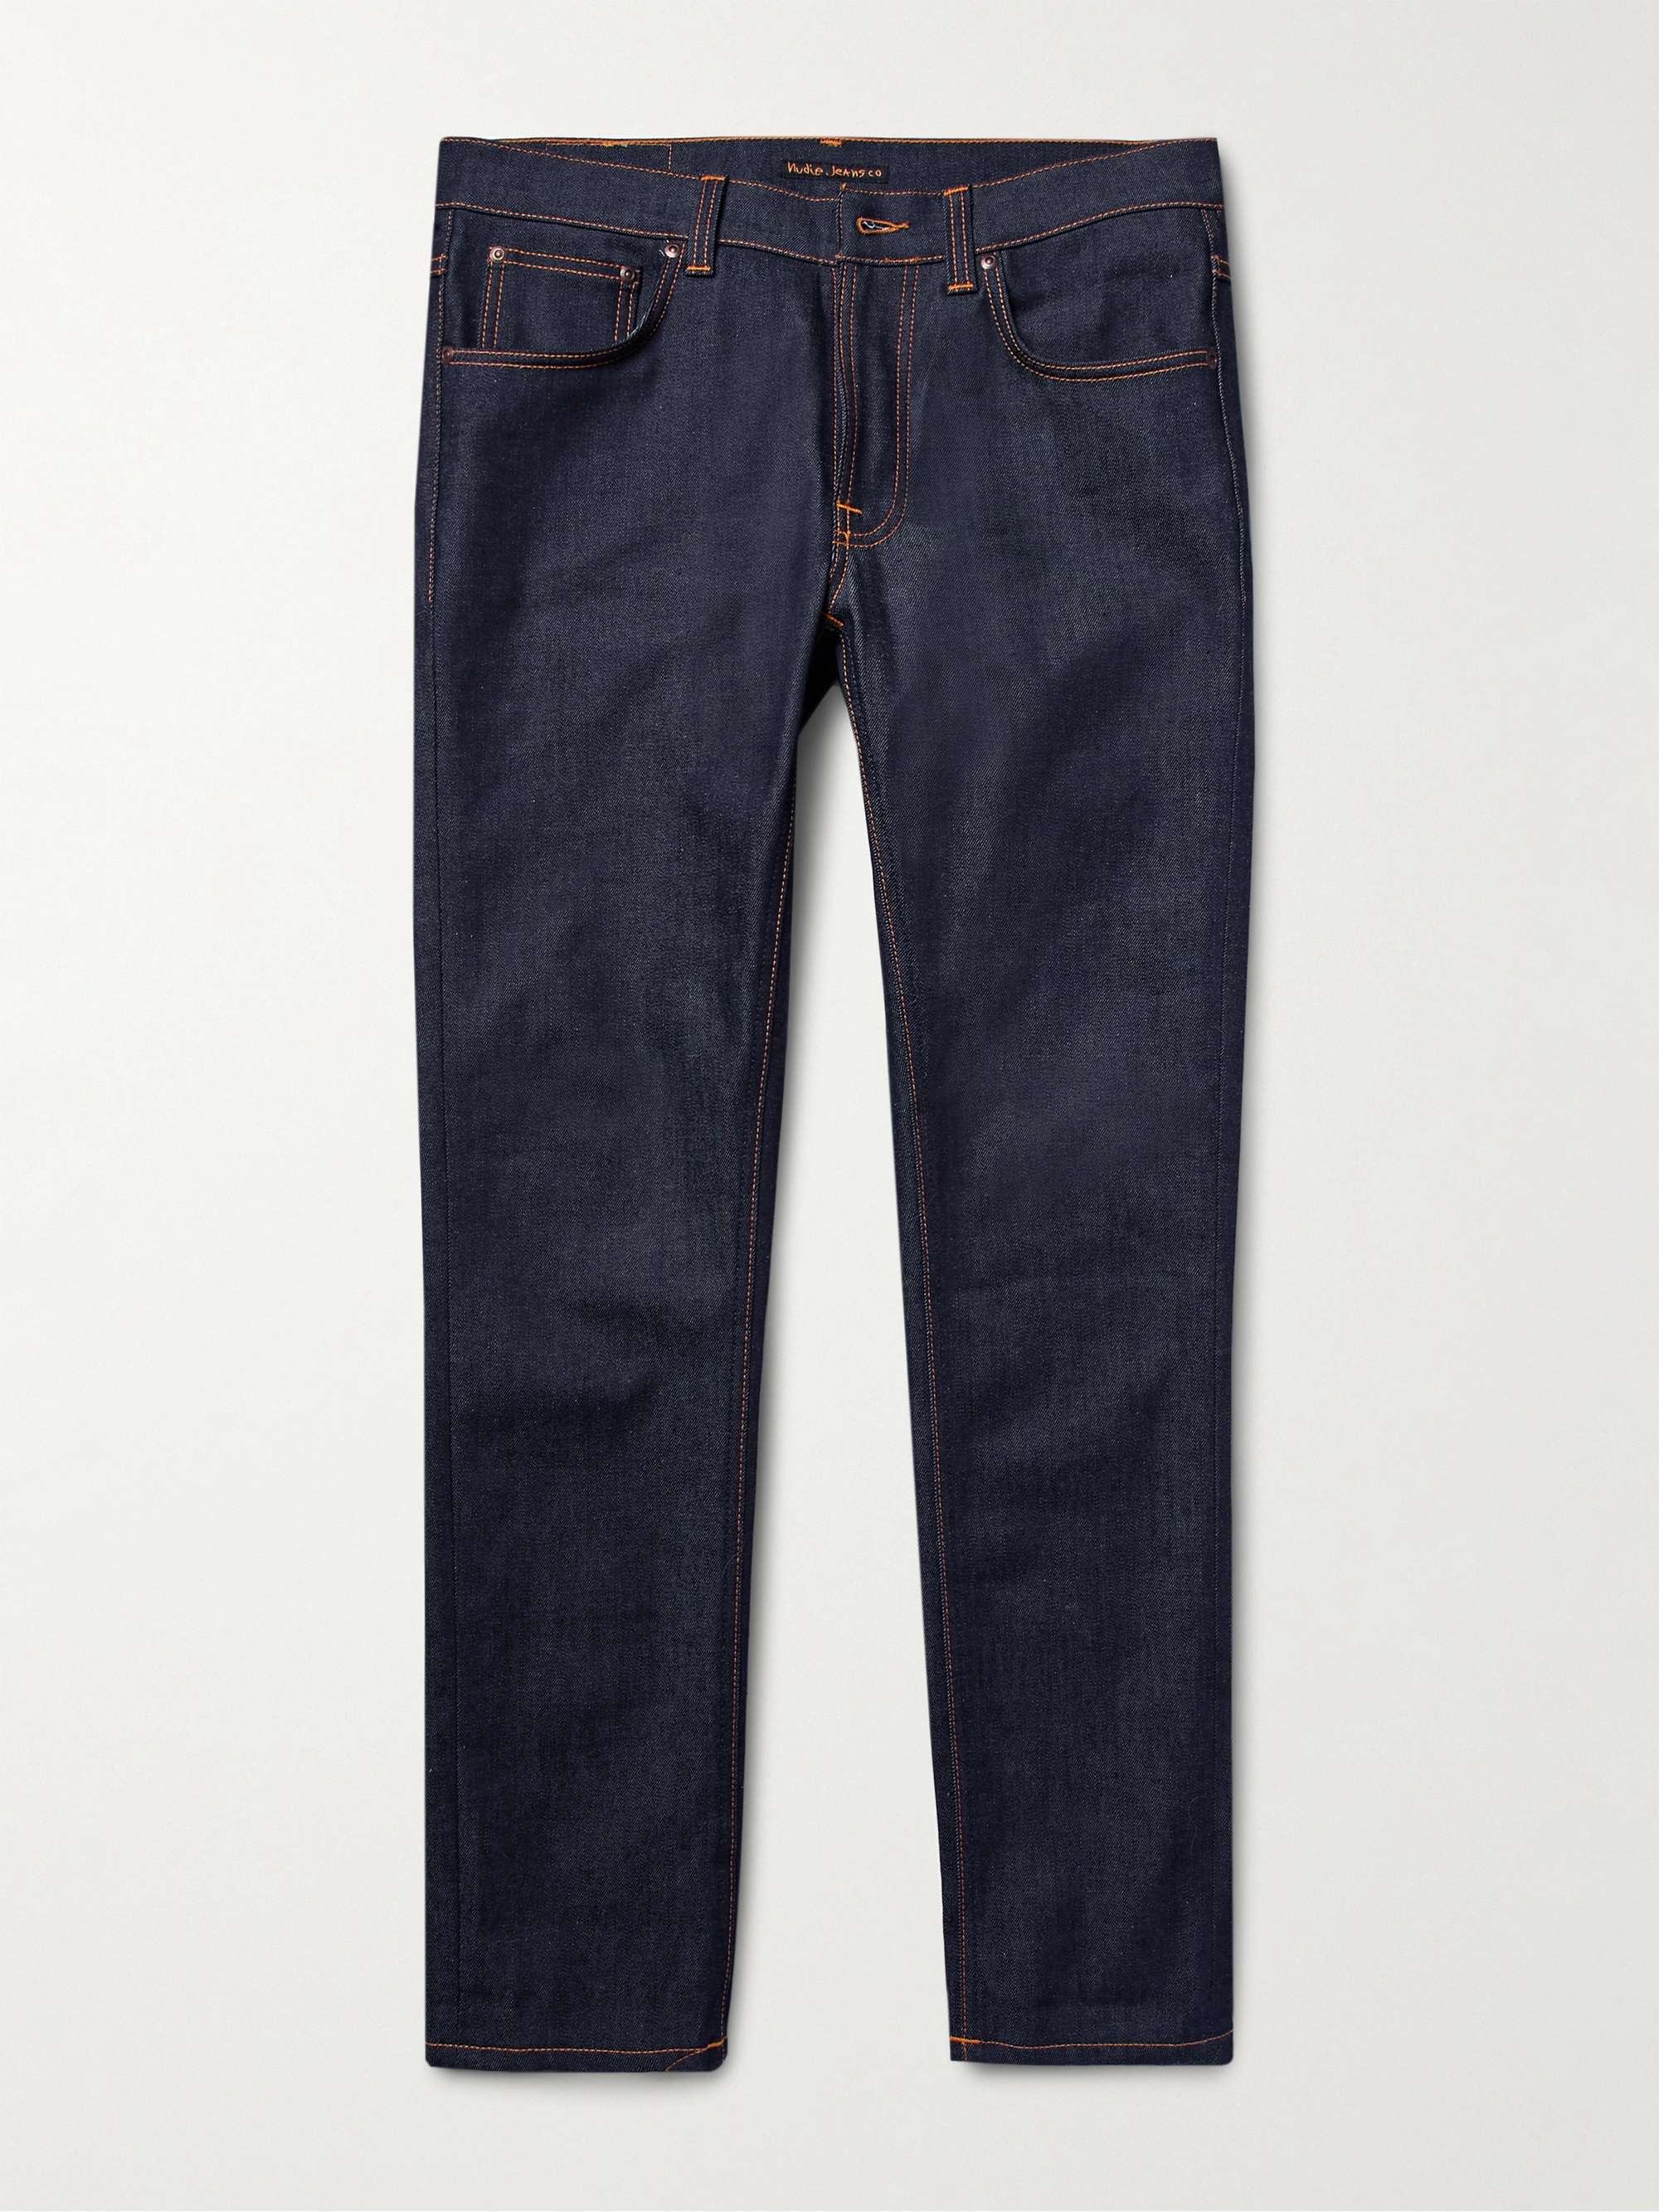 Tom Audreath maling Mathis NUDIE JEANS Lean Dean Slim-Fit Dry Organic Denim Jeans for Men | MR PORTER